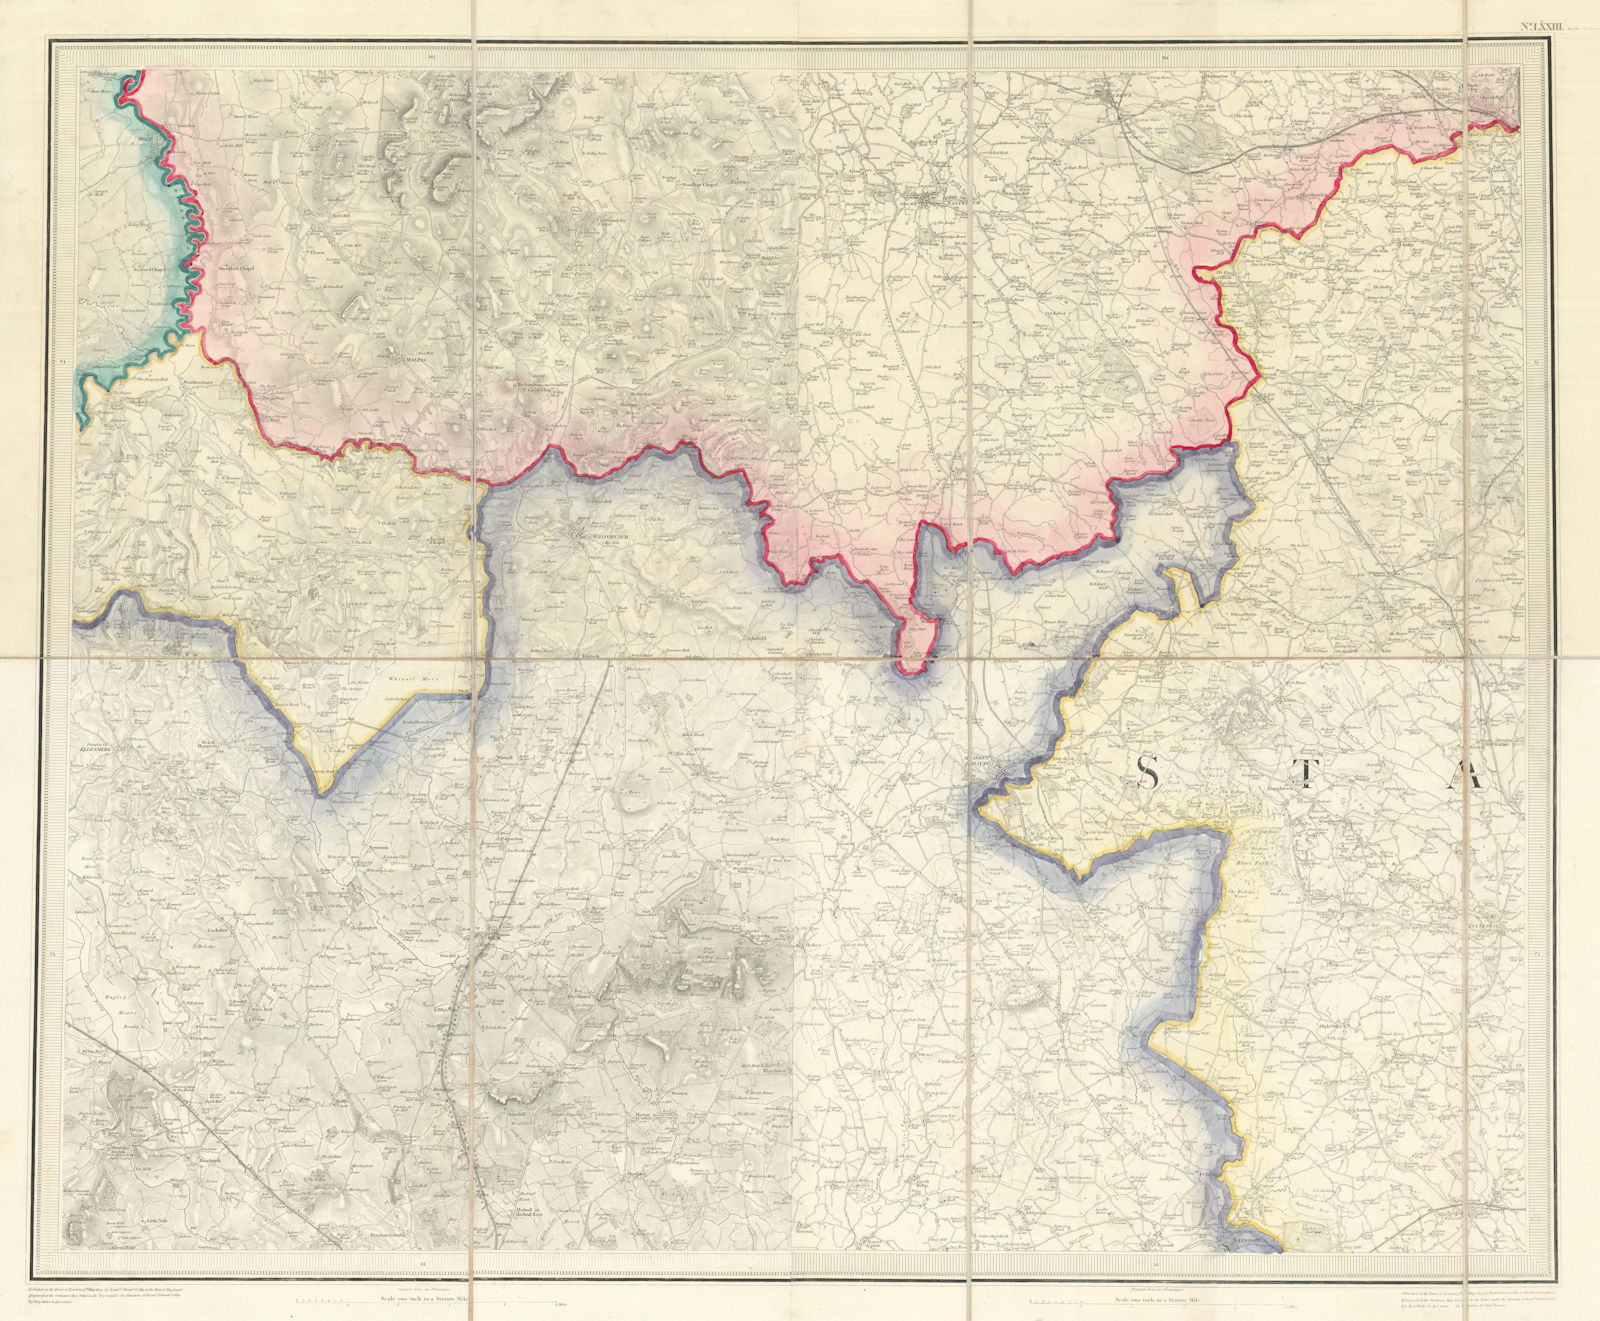 OS #73 Shropshire Cheshire & Staffordshire Plain. Malpas Crewe Nantwich 1833 map